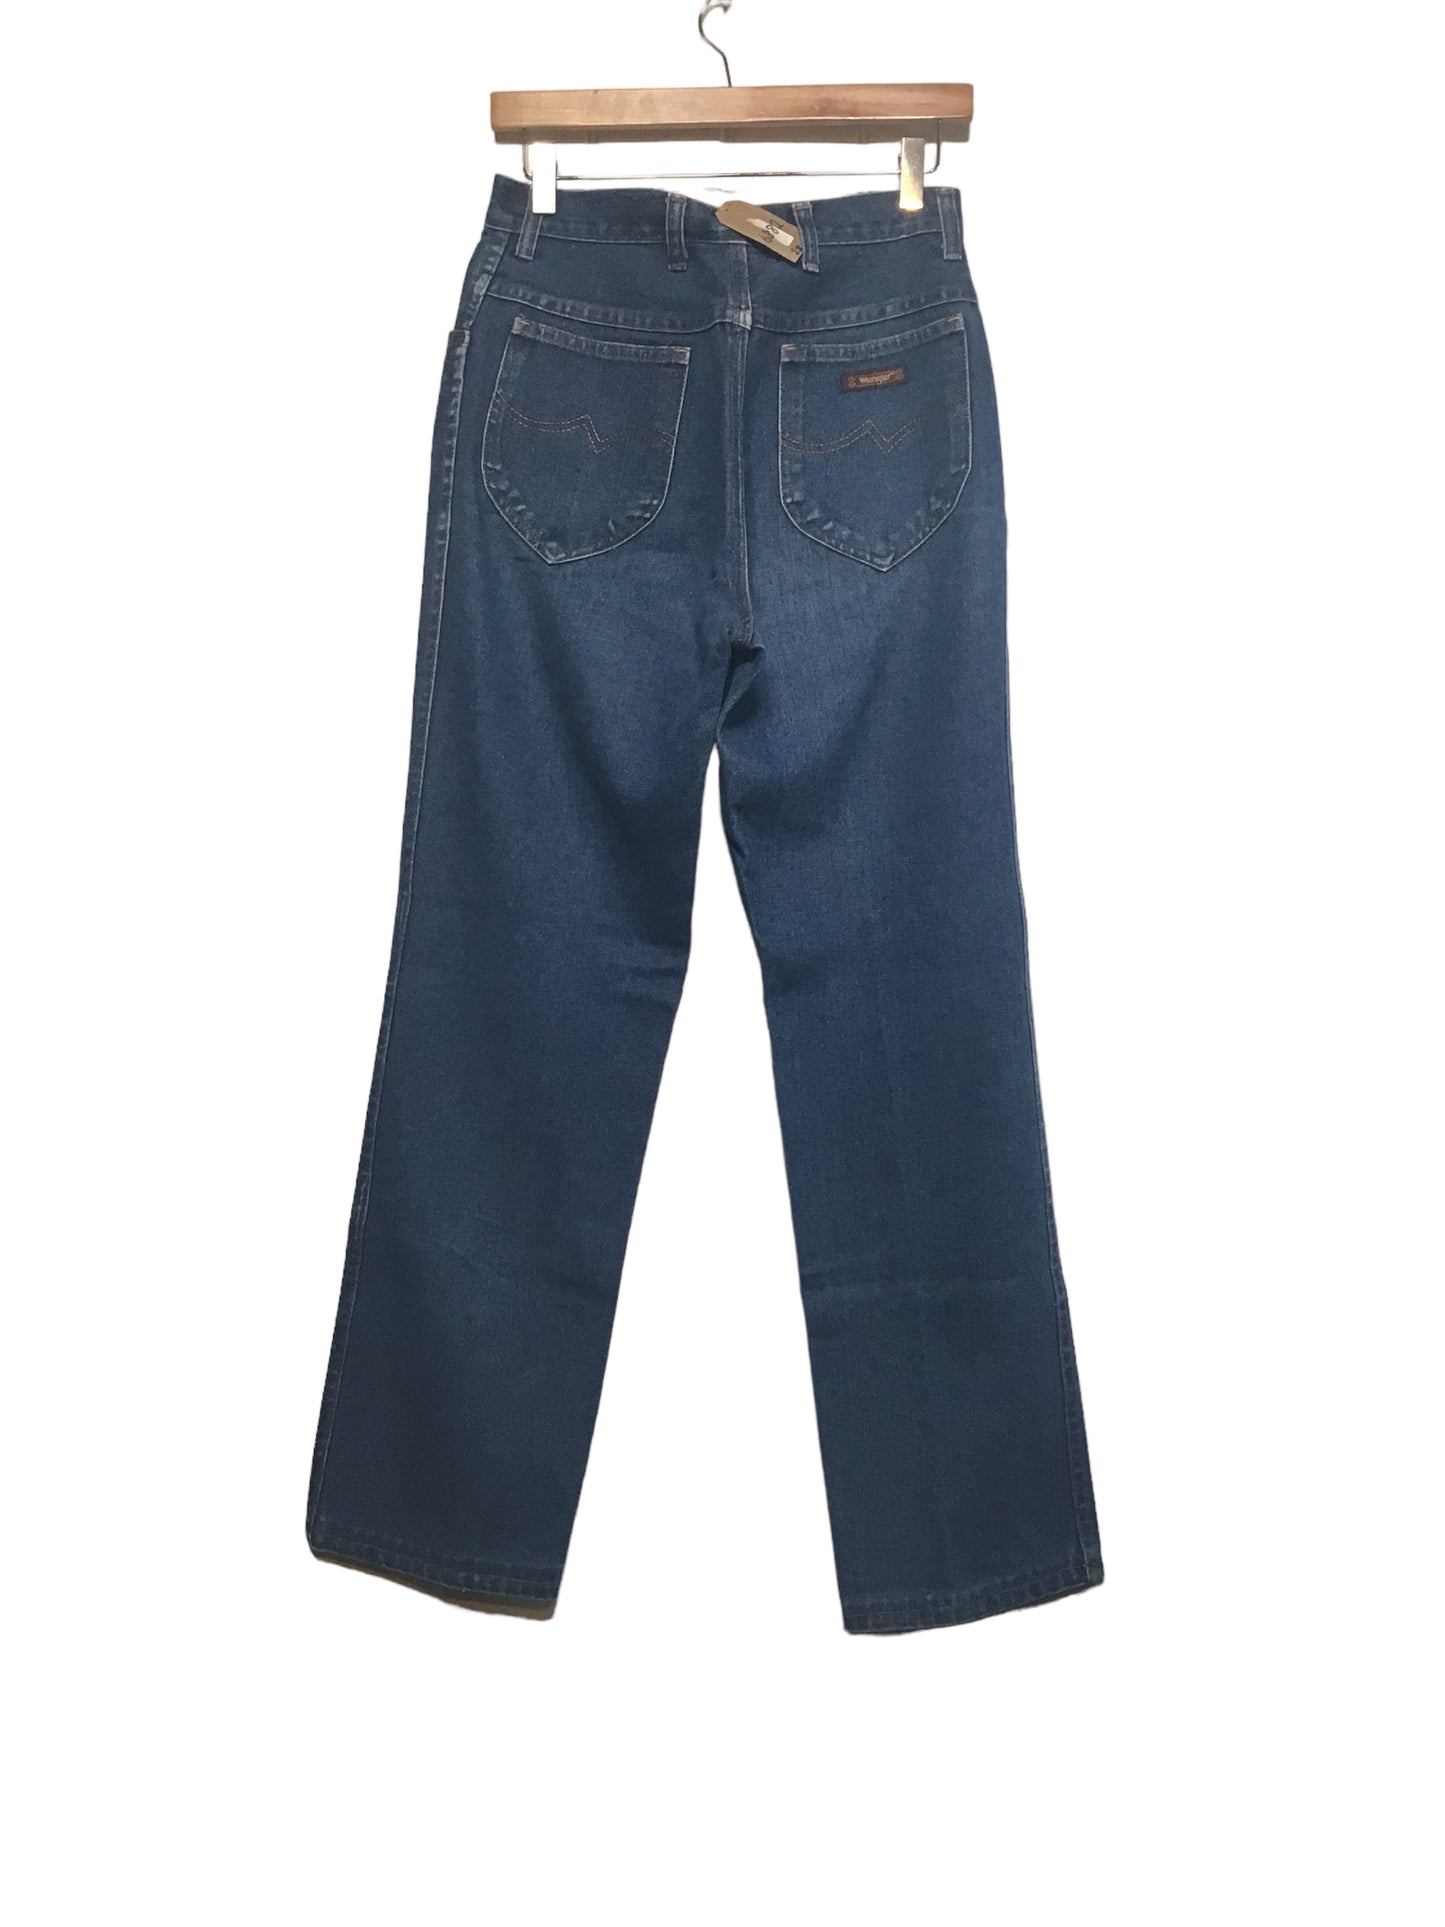 Wrangler Jeans (29x31)